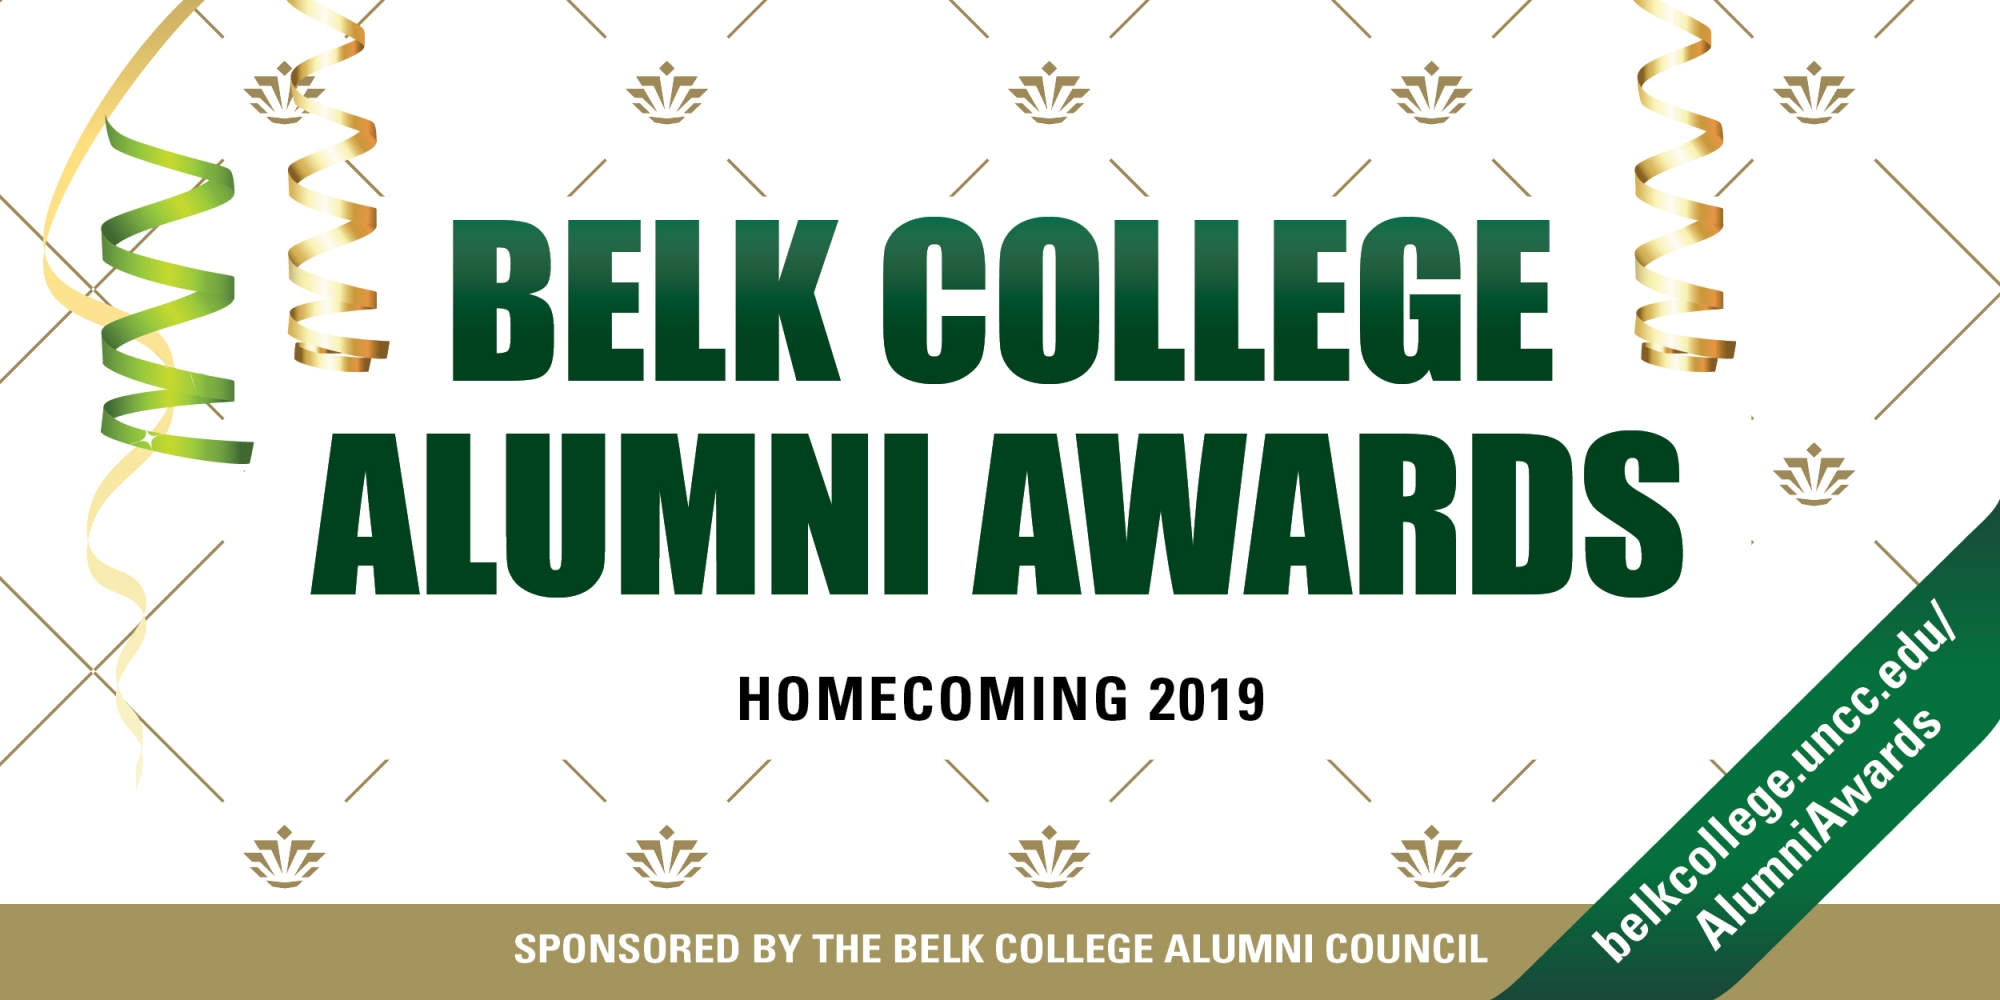 Belk College Alumni Awards 2019